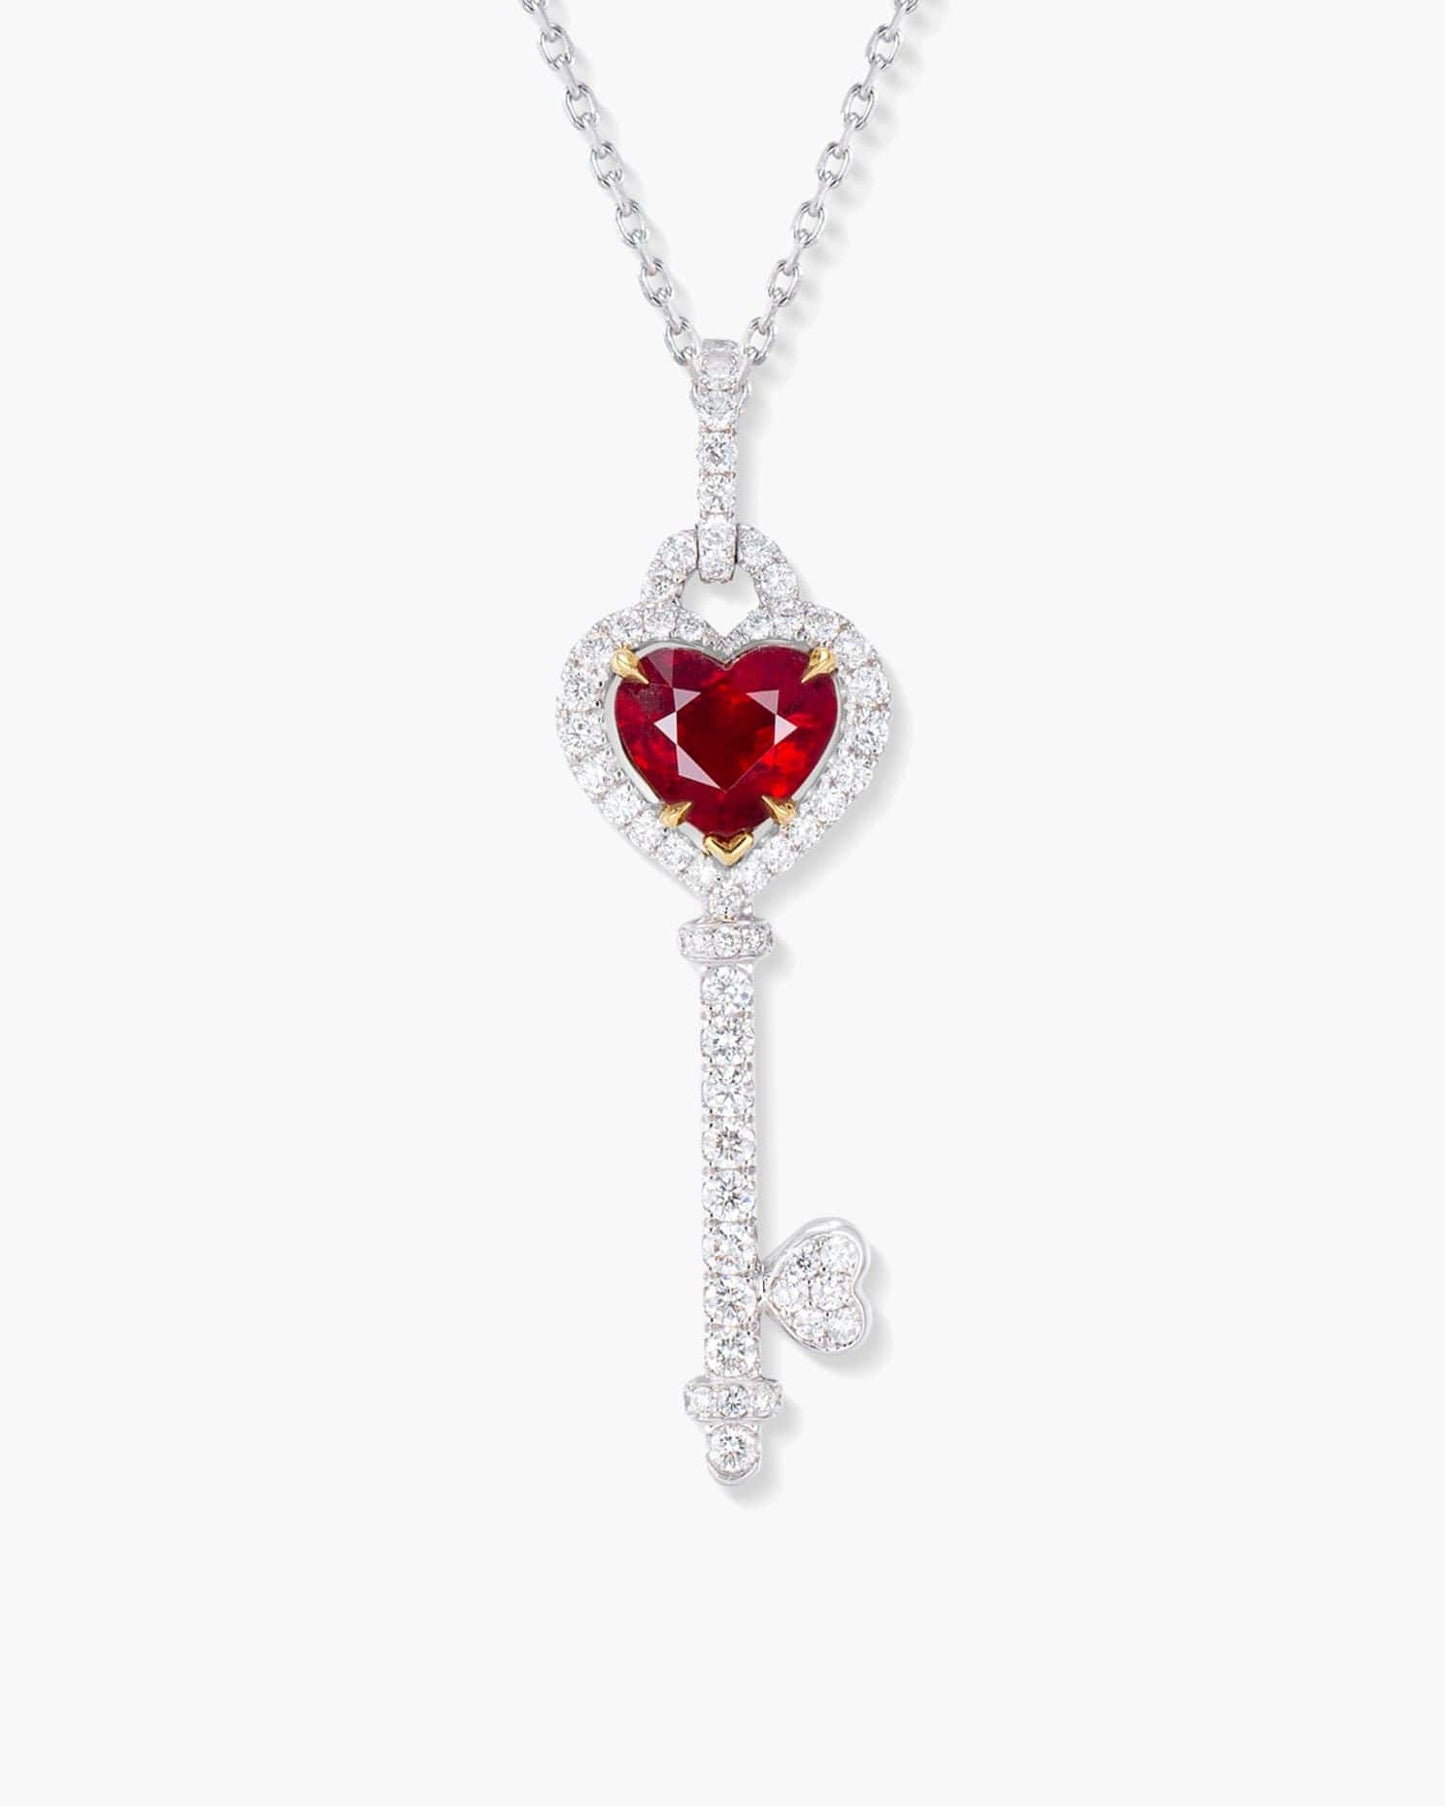 Heart Shape Burmese Ruby and Diamond Key Pendant Necklace, 1.95 carats